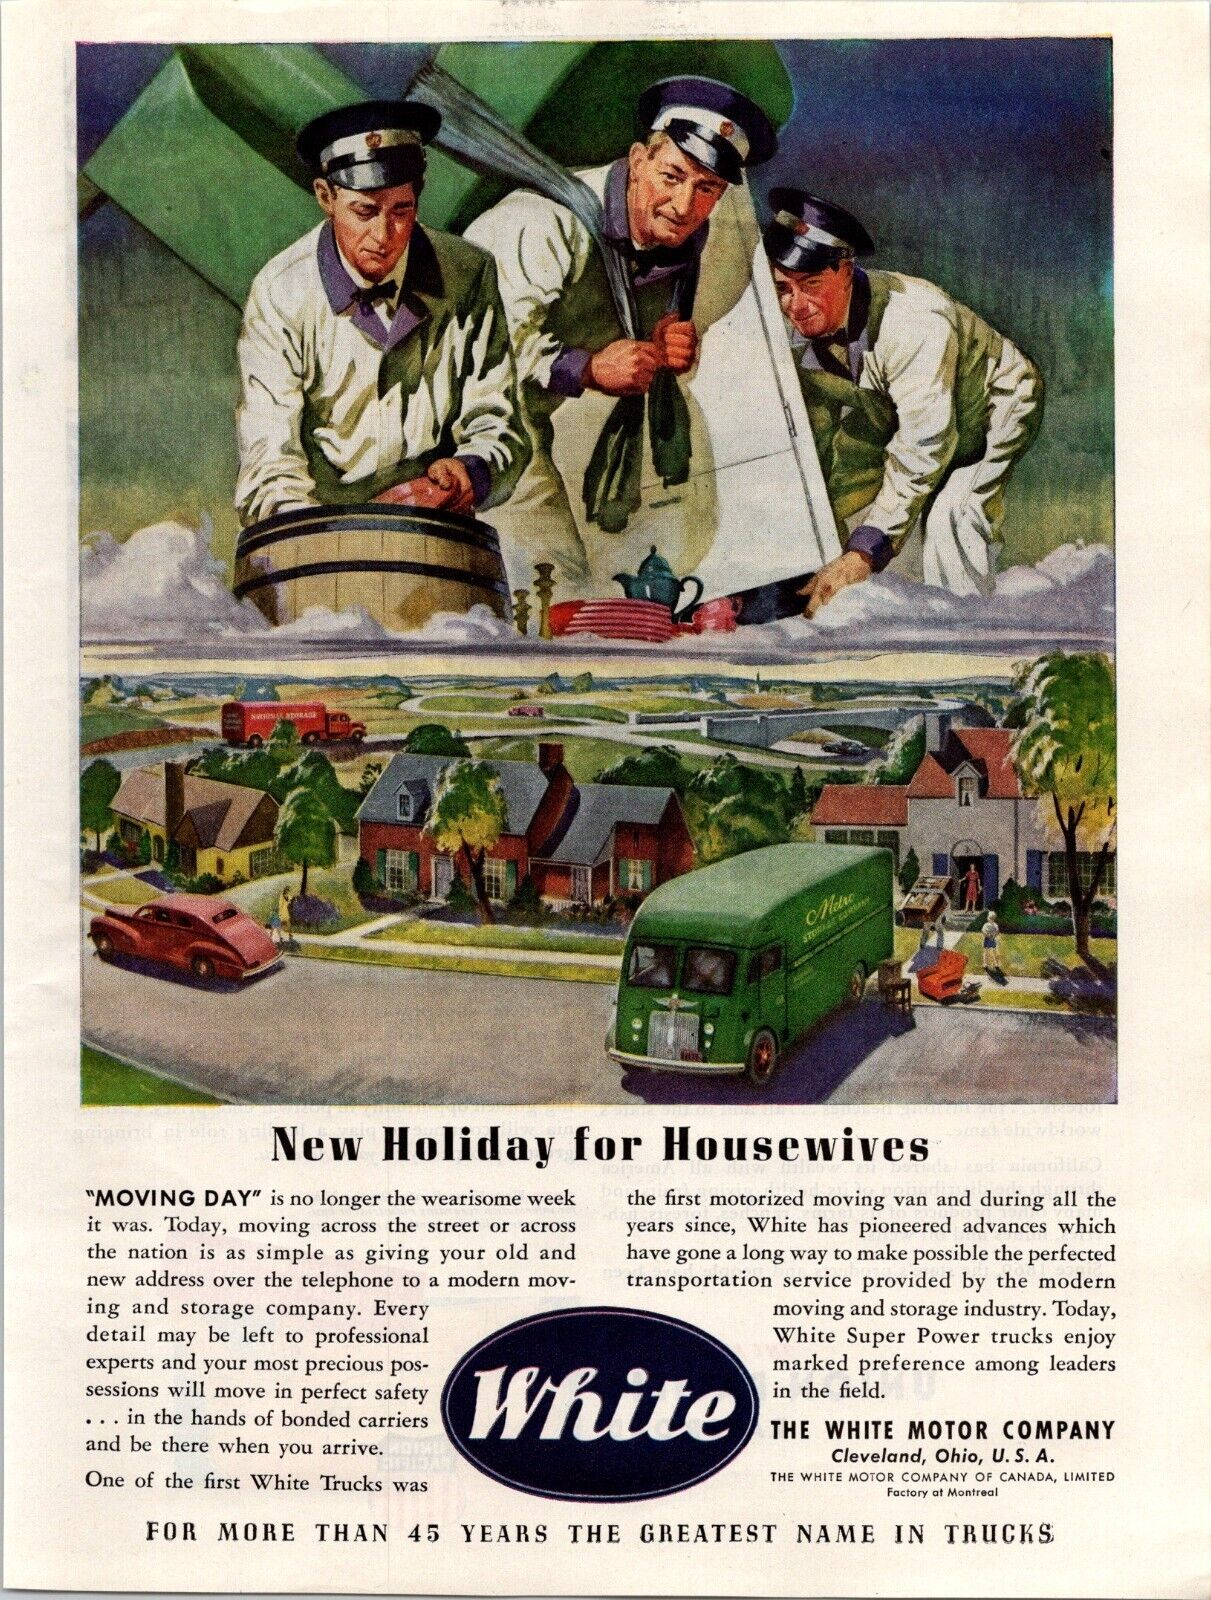 VINTAGE 1945 THE WHITE MOTOR COMPANY PRINT AD